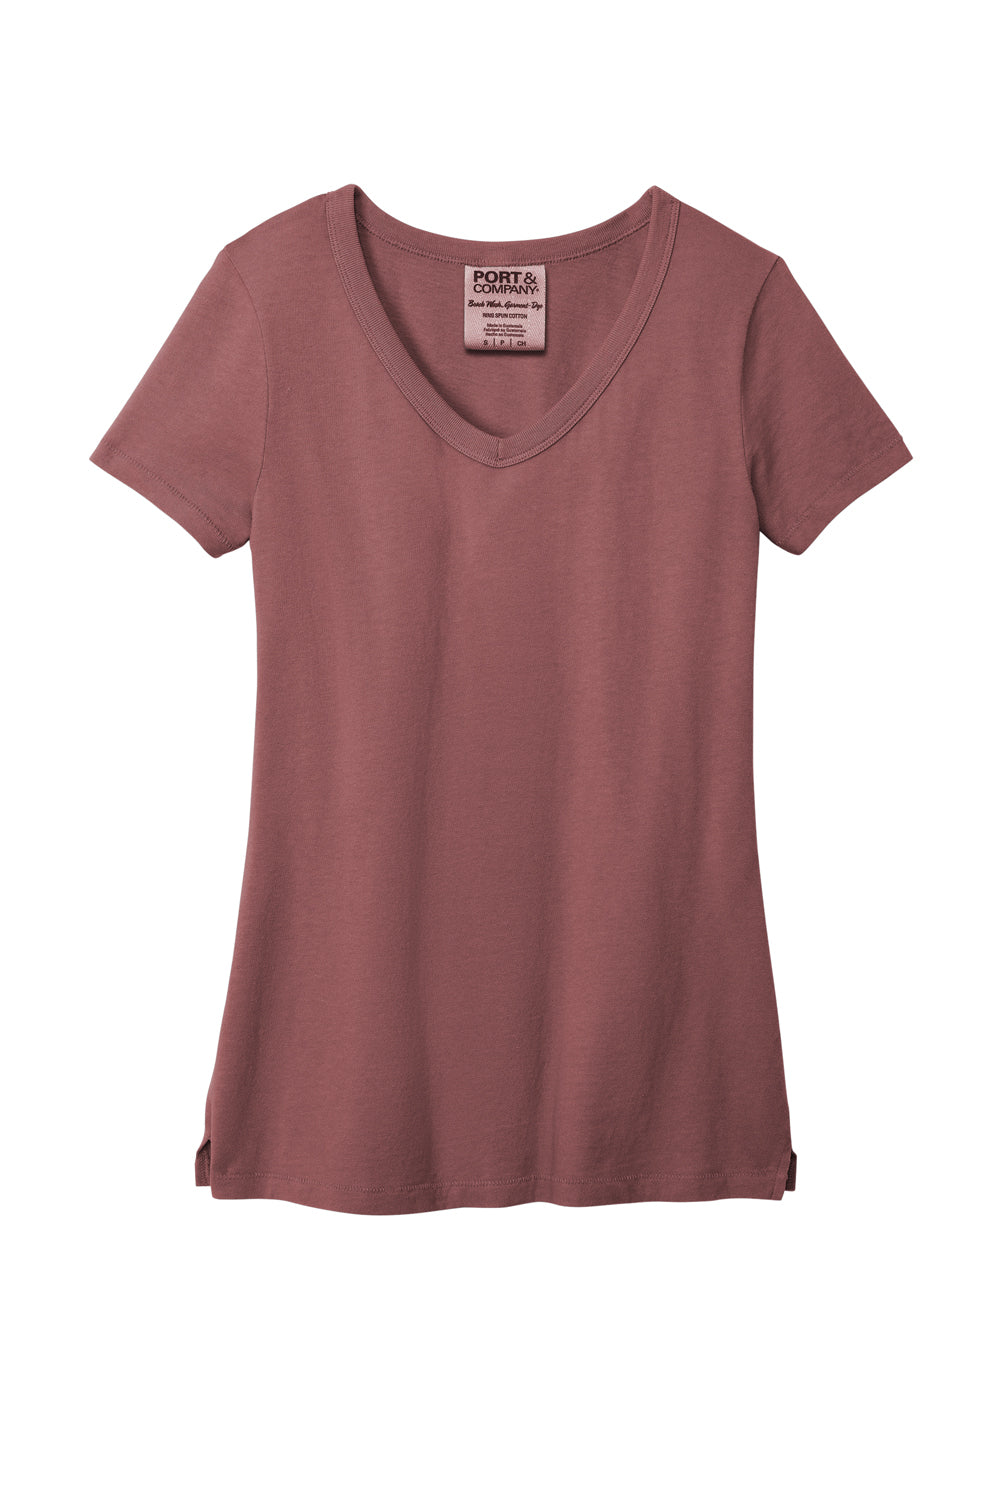 Port & Company LPC099V Womens Beach Wash Garment Dyed Short Sleeve V-Neck T-Shirt Nostalgia Rose Flat Front